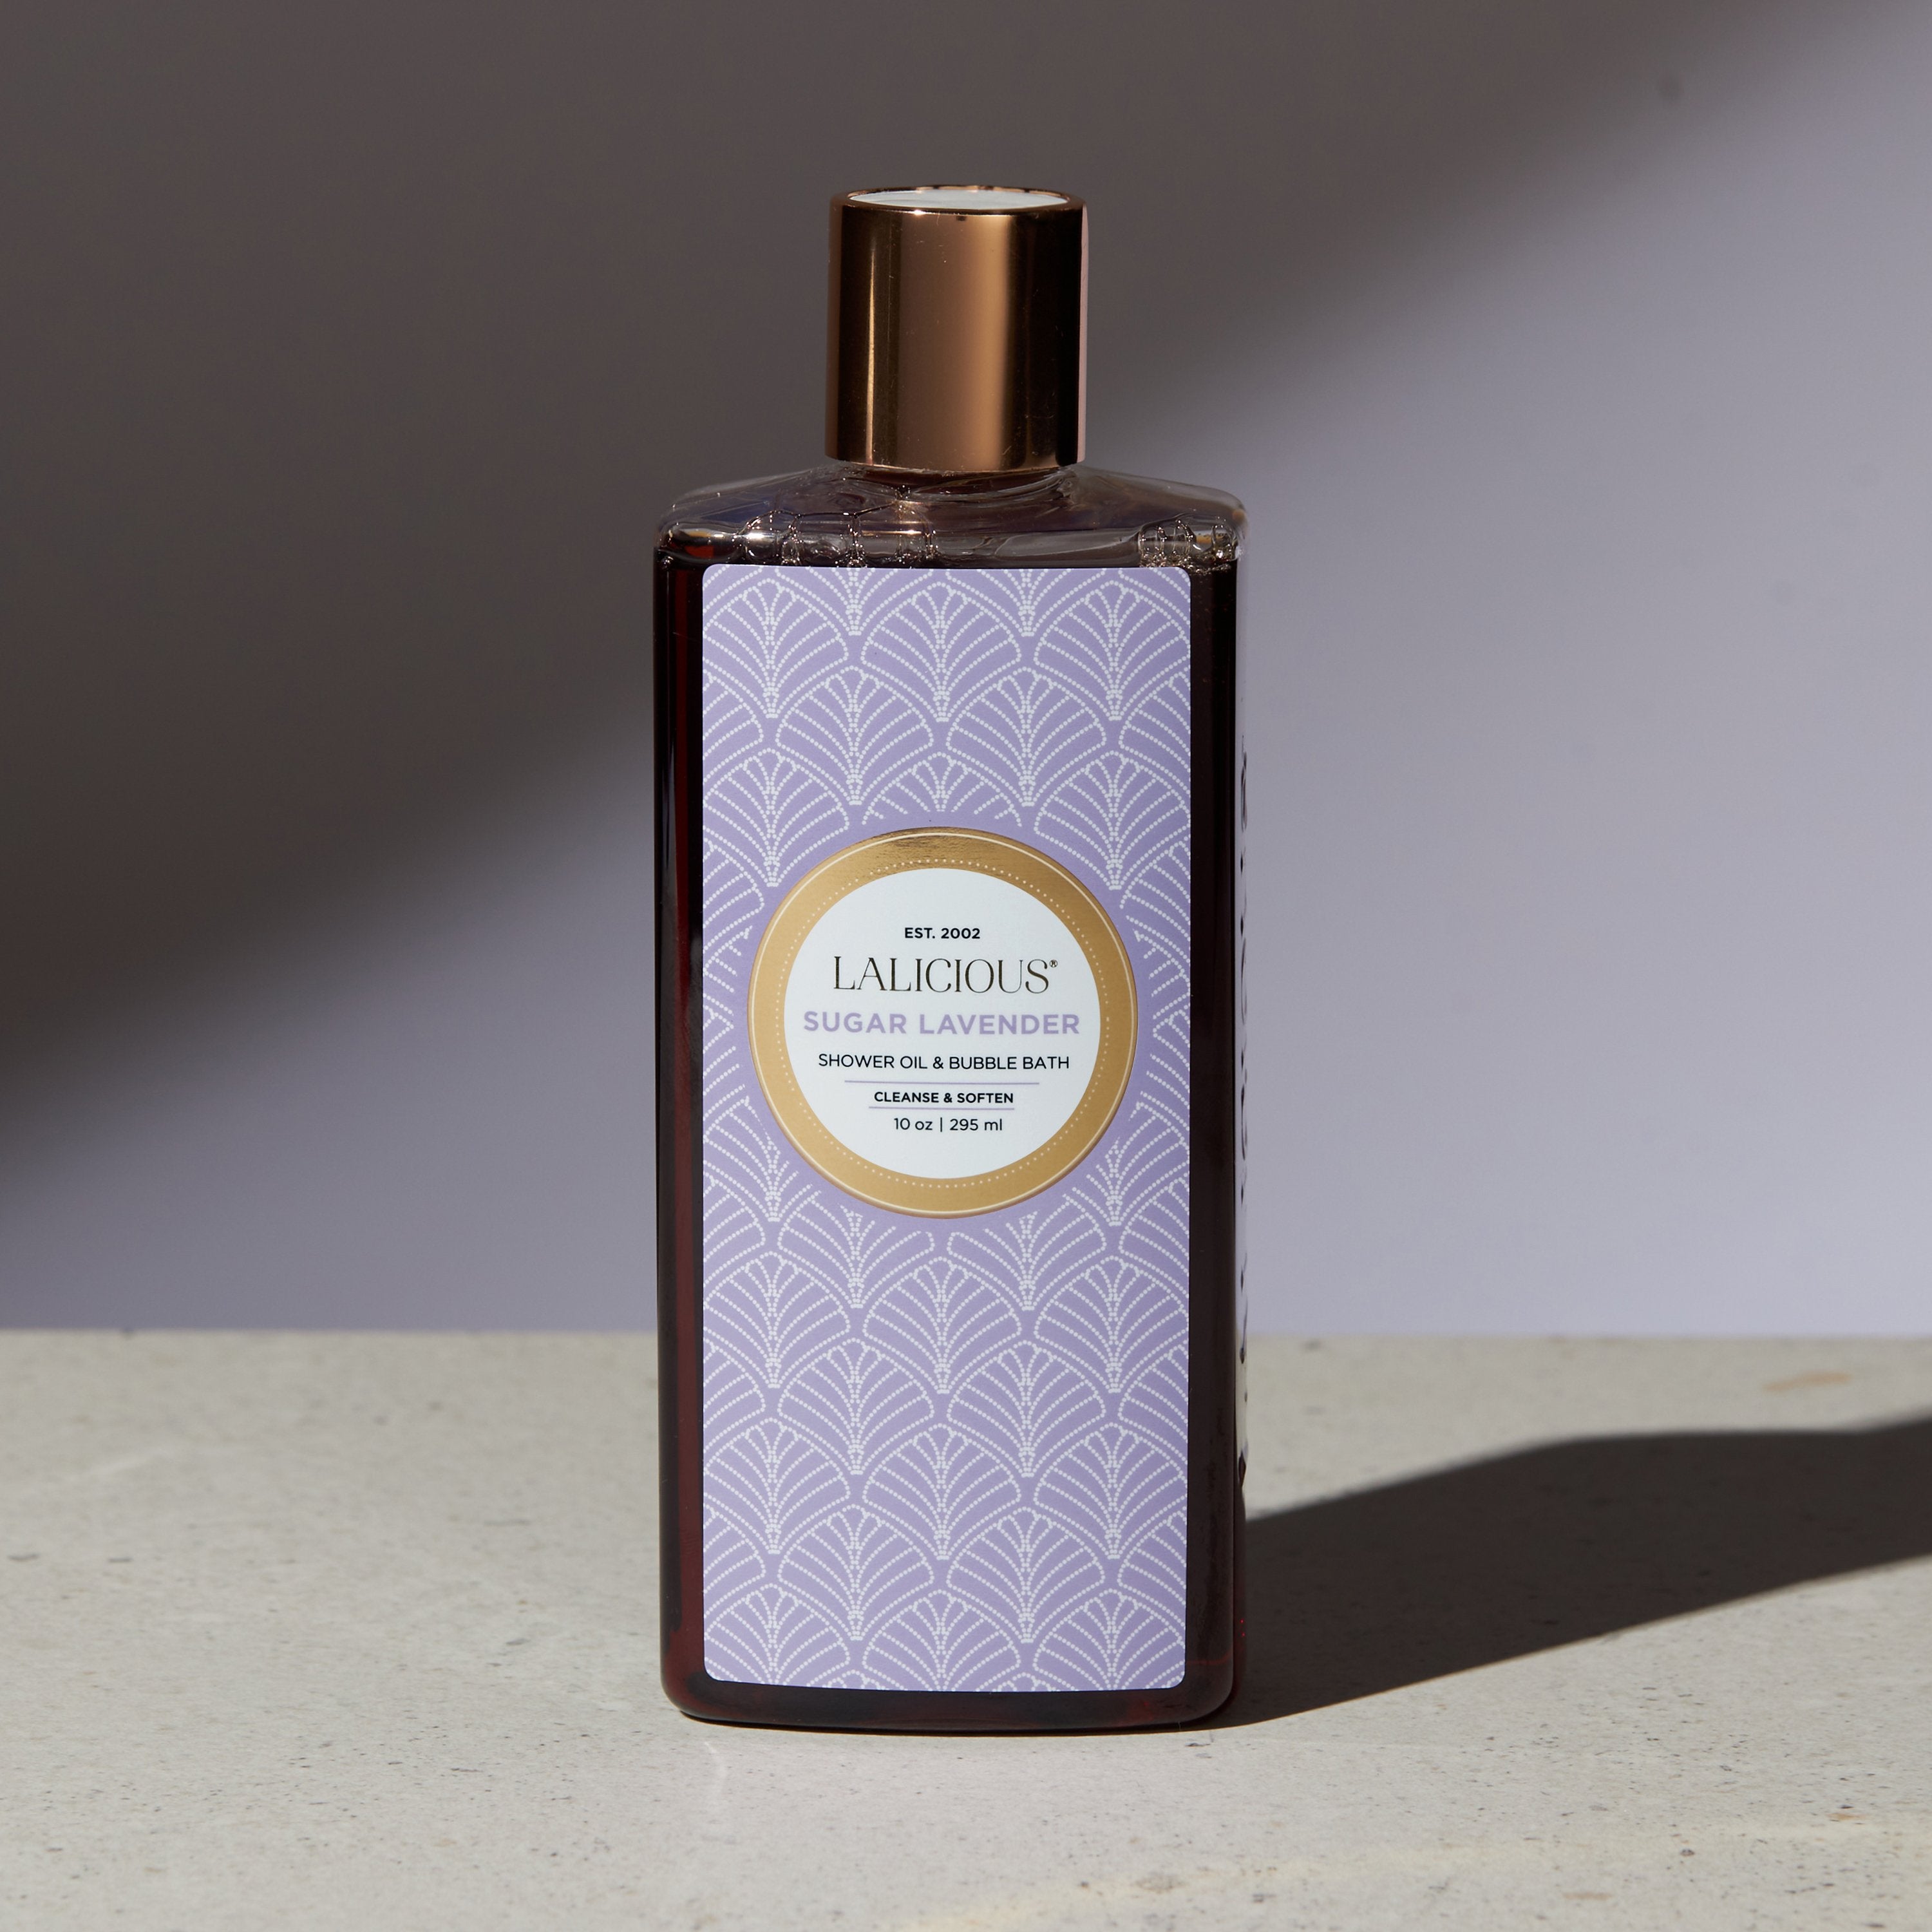 Lalicious Sugar Lavender Shower Oil & Bubble Bath